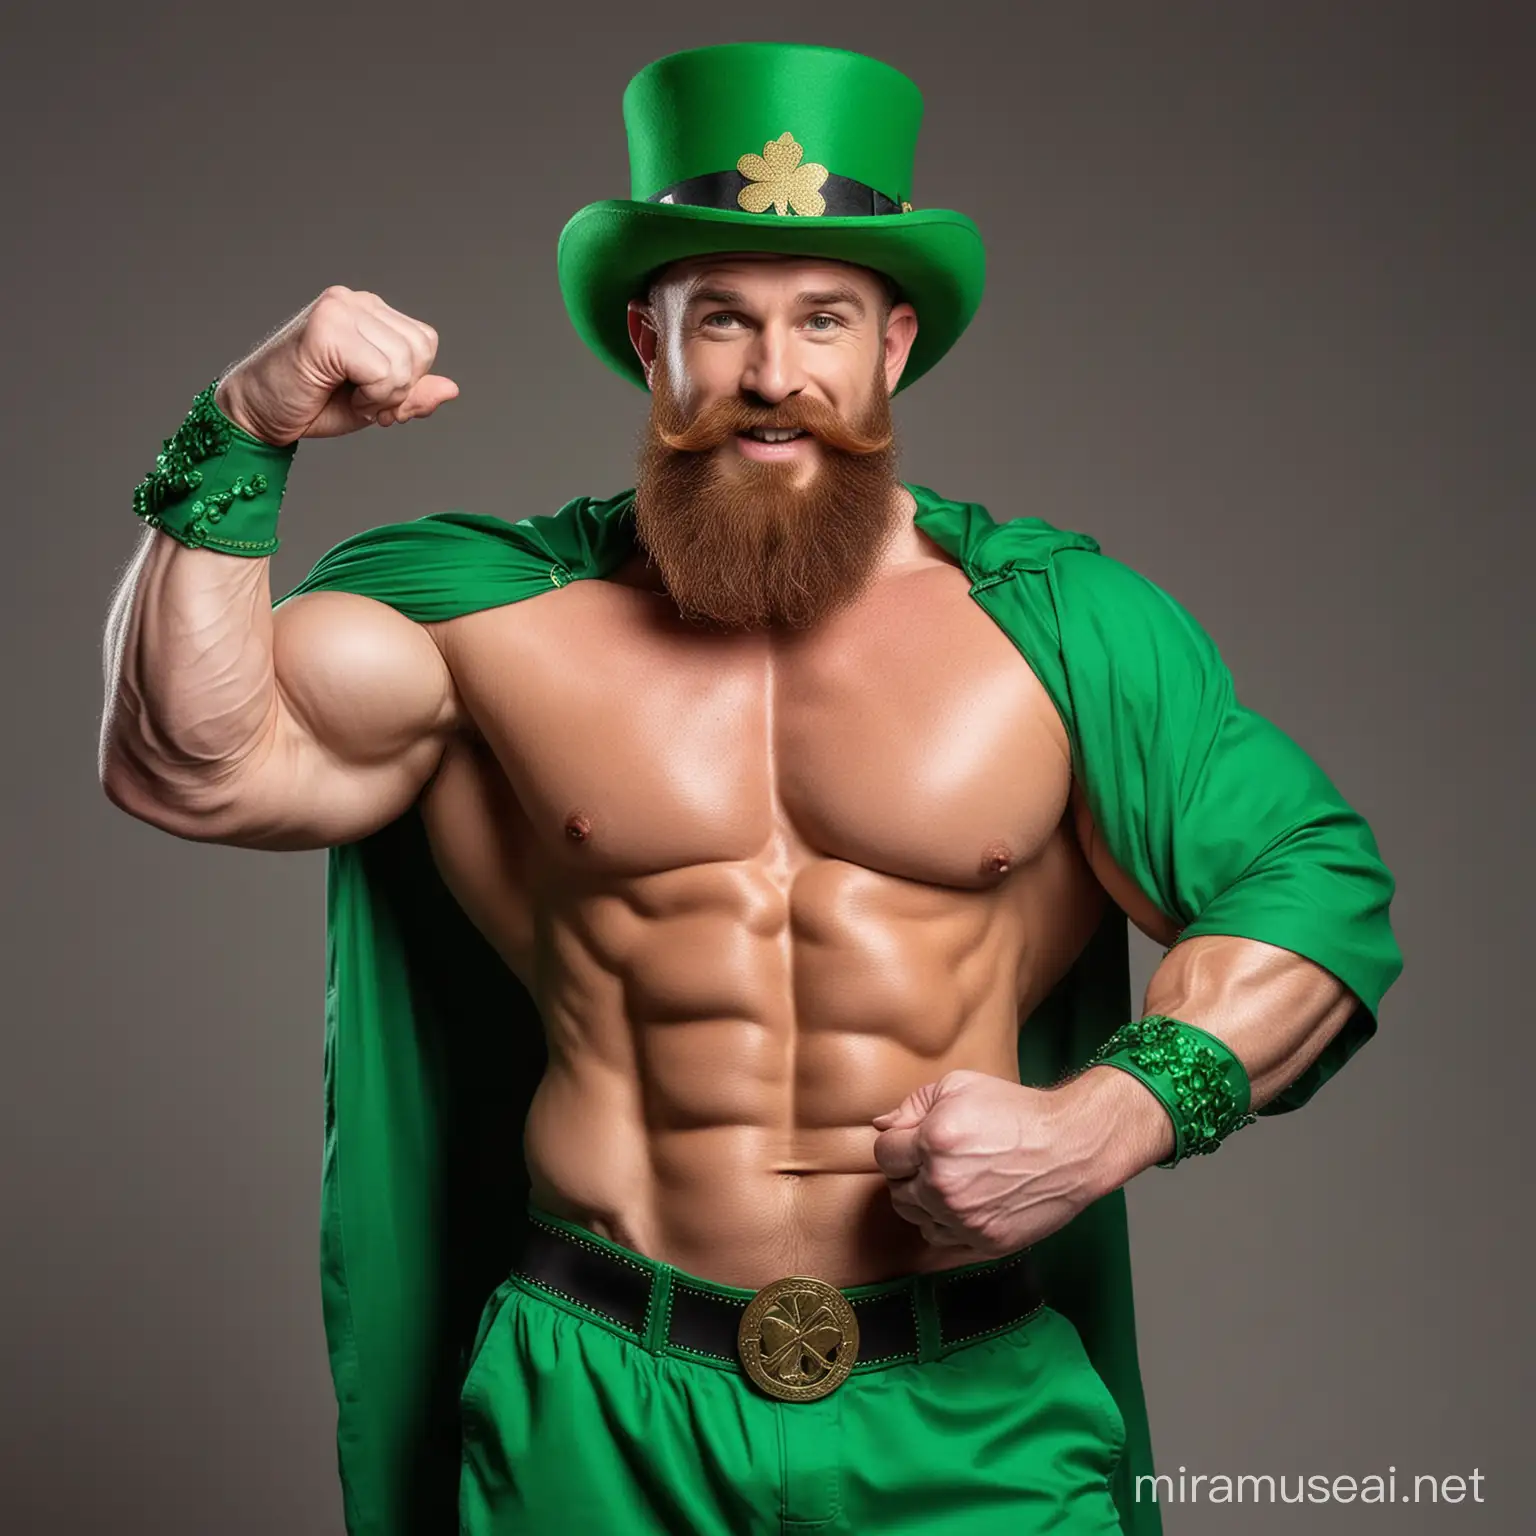 Topless Beefy IFBB Bodybuilder Beard Leprechaun wearing unbuttoned Irish Green Attire Outfit Holding Irish Shamrocks, Tall Green Hat and Flexing his Big Strong Arm